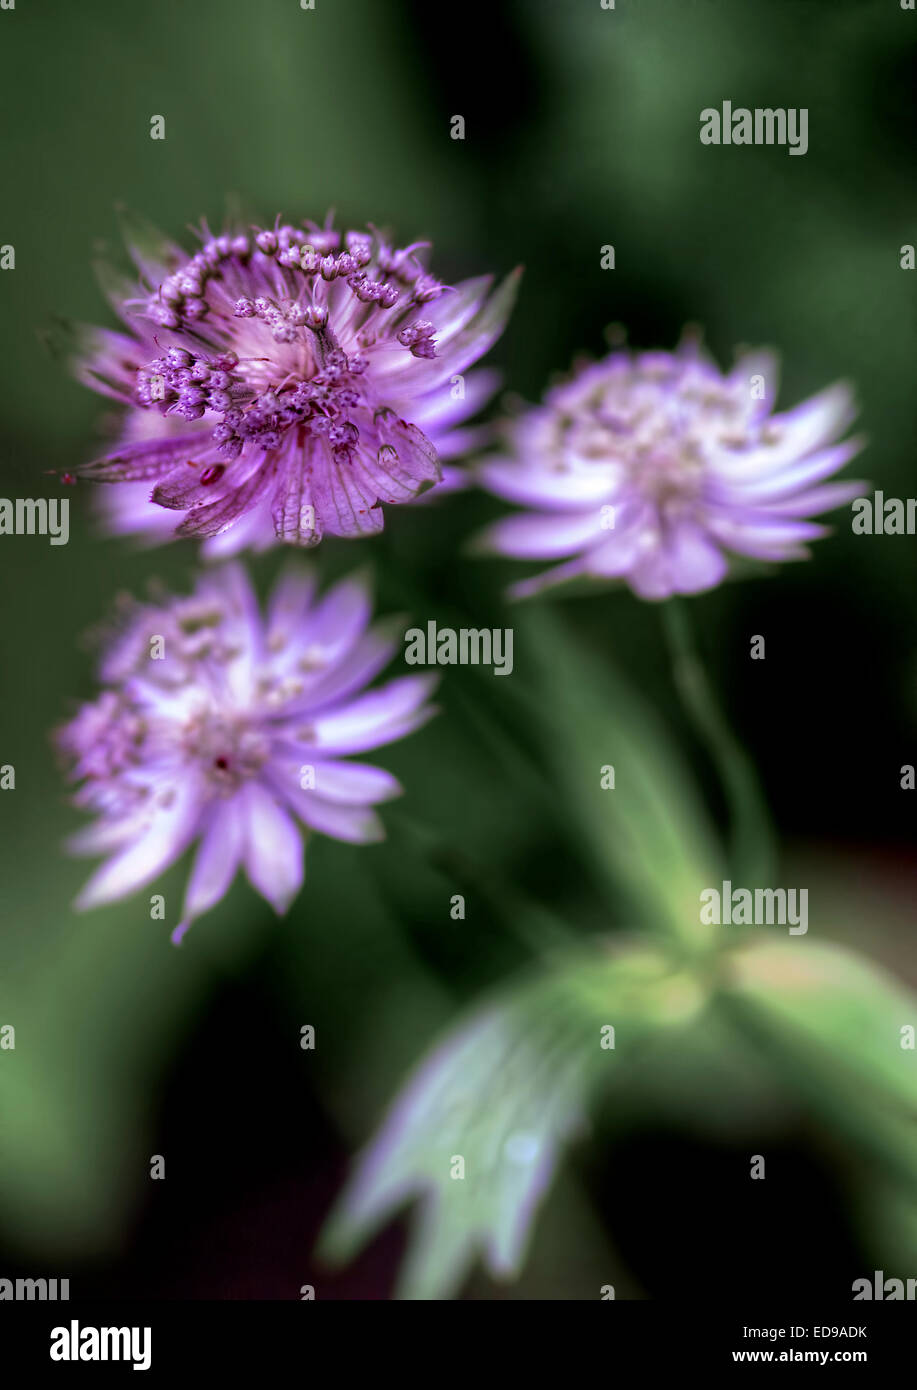 A British wild flower called Astrantia Stock Photo